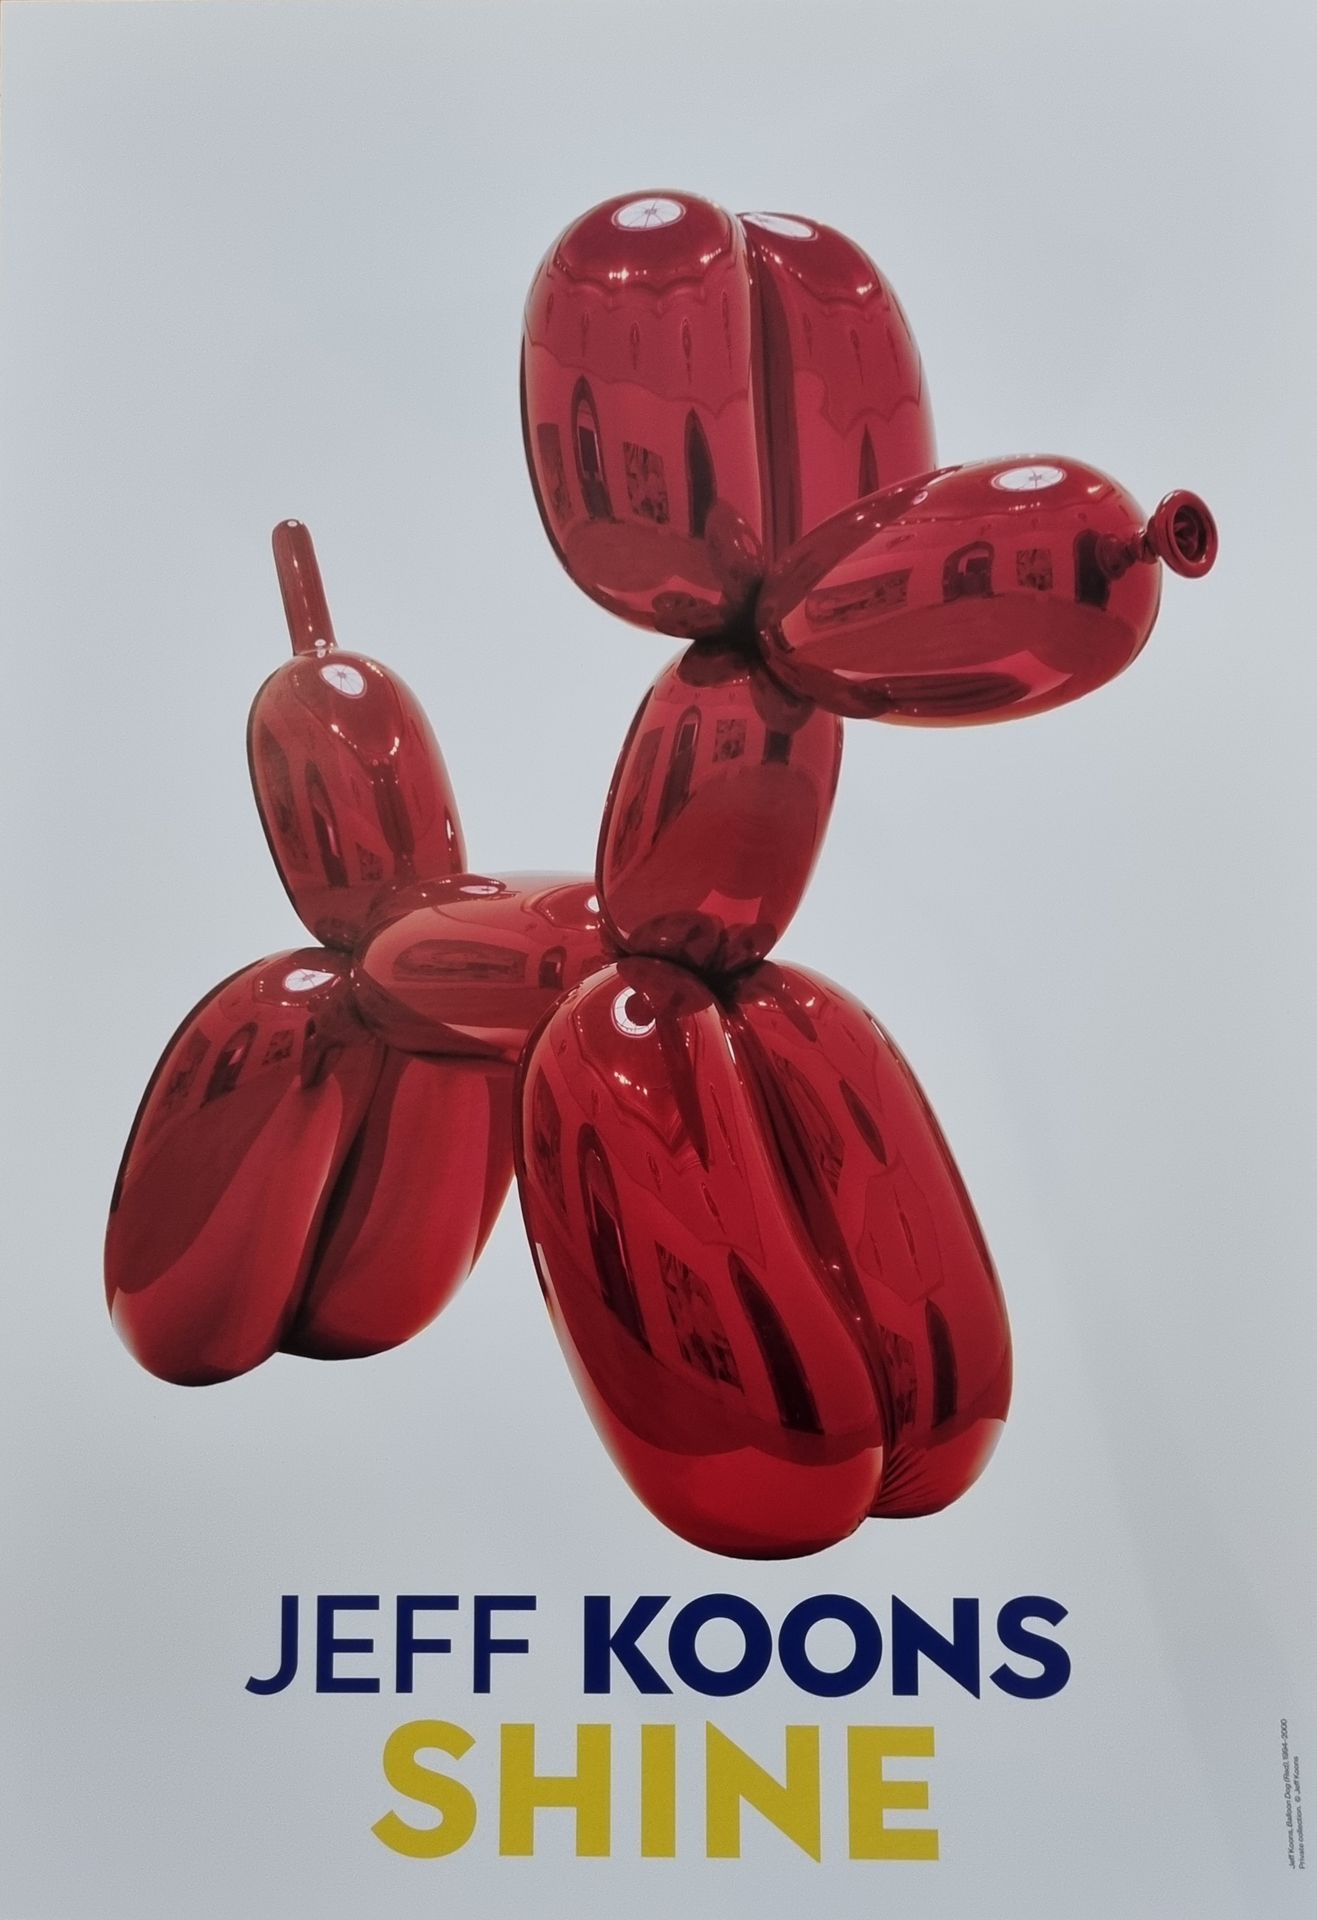 KOONS JEFF (JEFFREY) KOONS JEFF (JEFFREY)
USA 1955

Unbenannt
2021

Offsetdruck
&hellip;